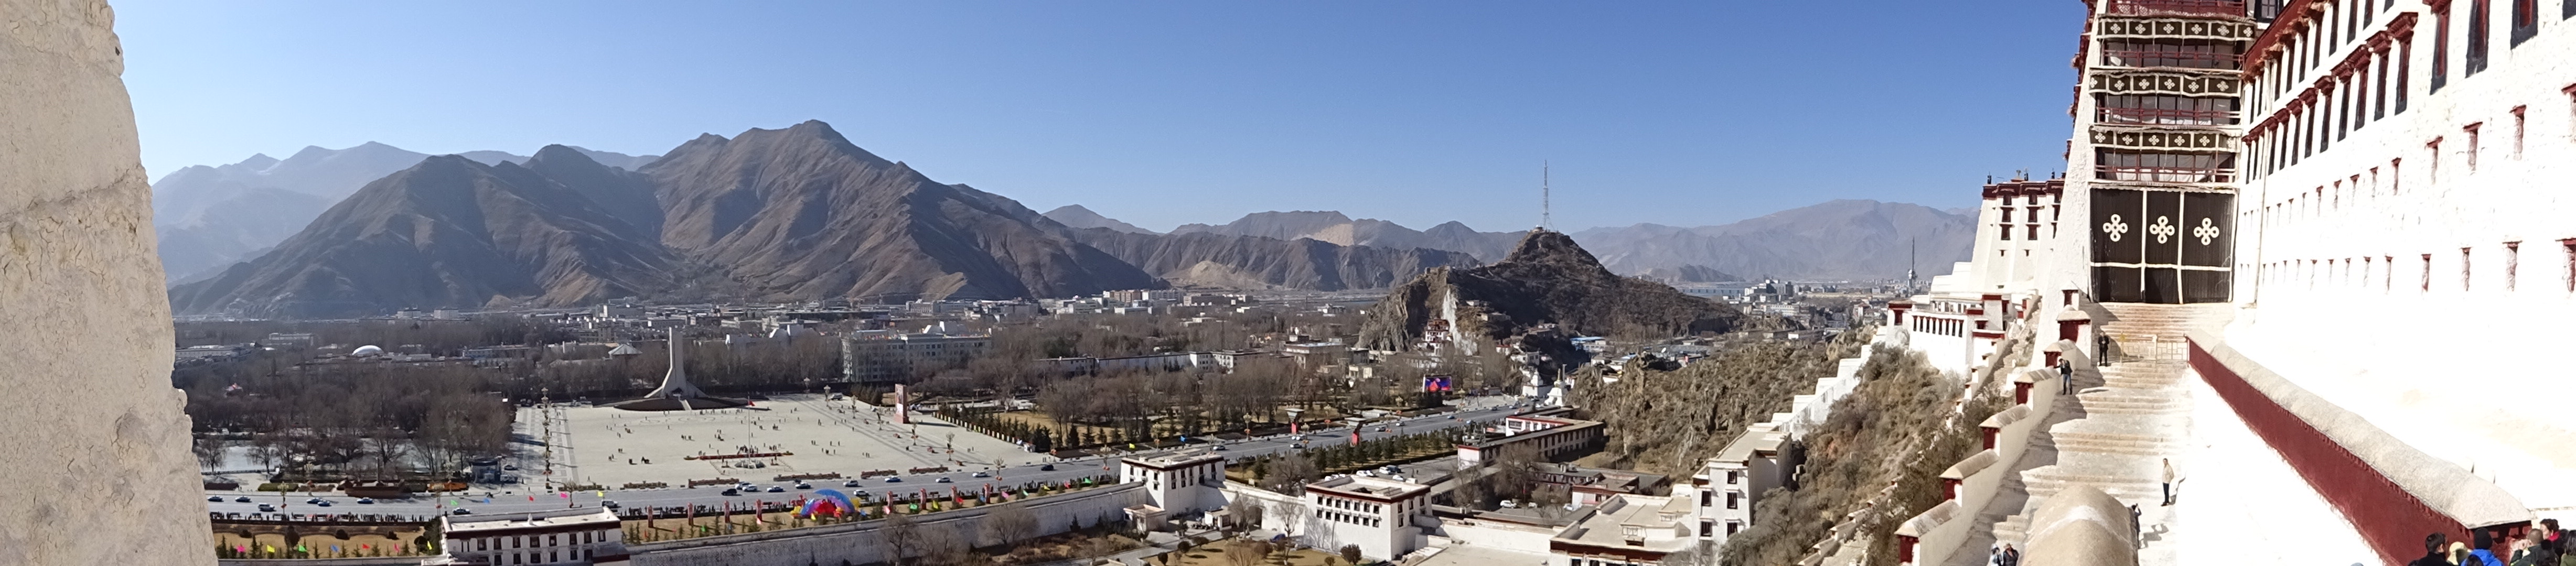 Panorama mit Blick vom Potala-Palast